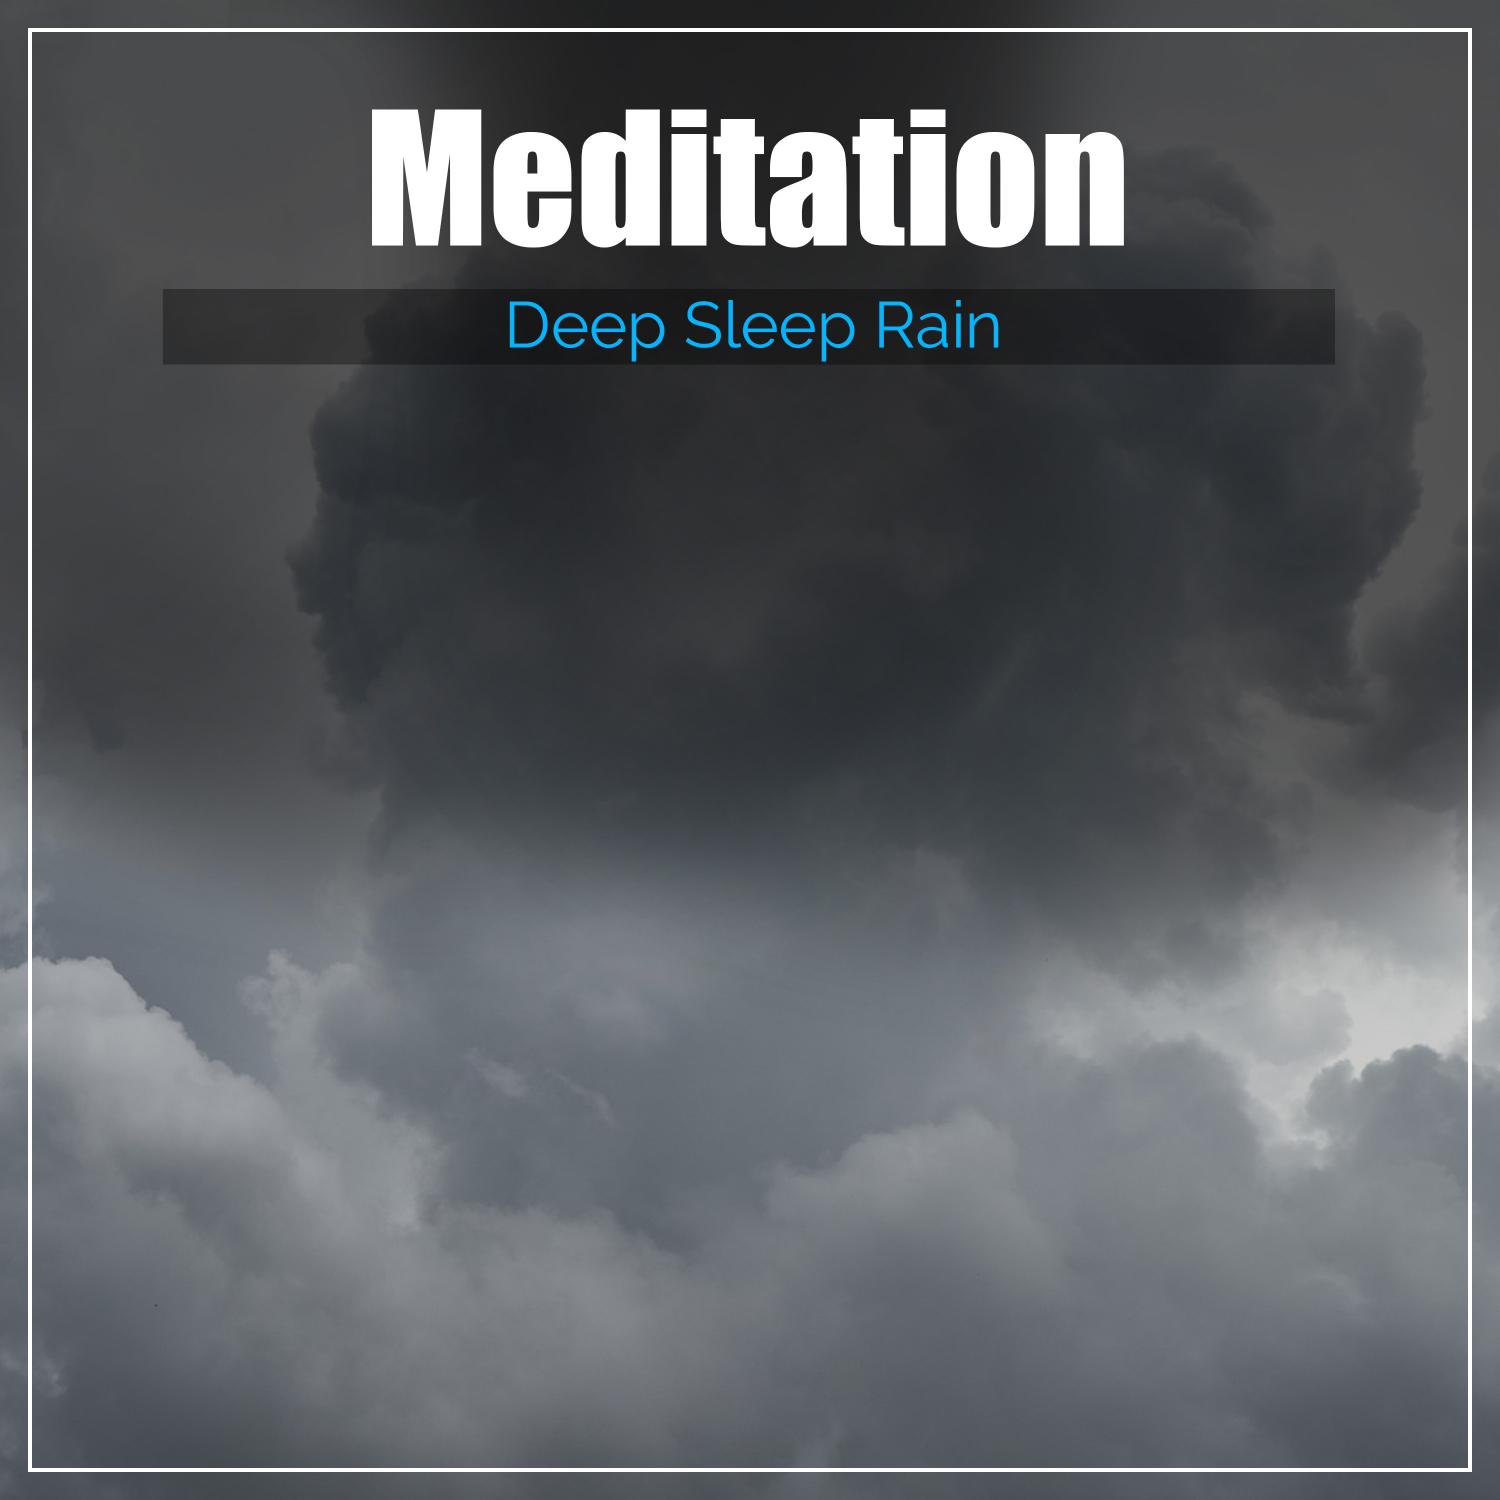 11 Meditation and Deep Sleep Rain Sounds to Relax and Fall Asleep Gently